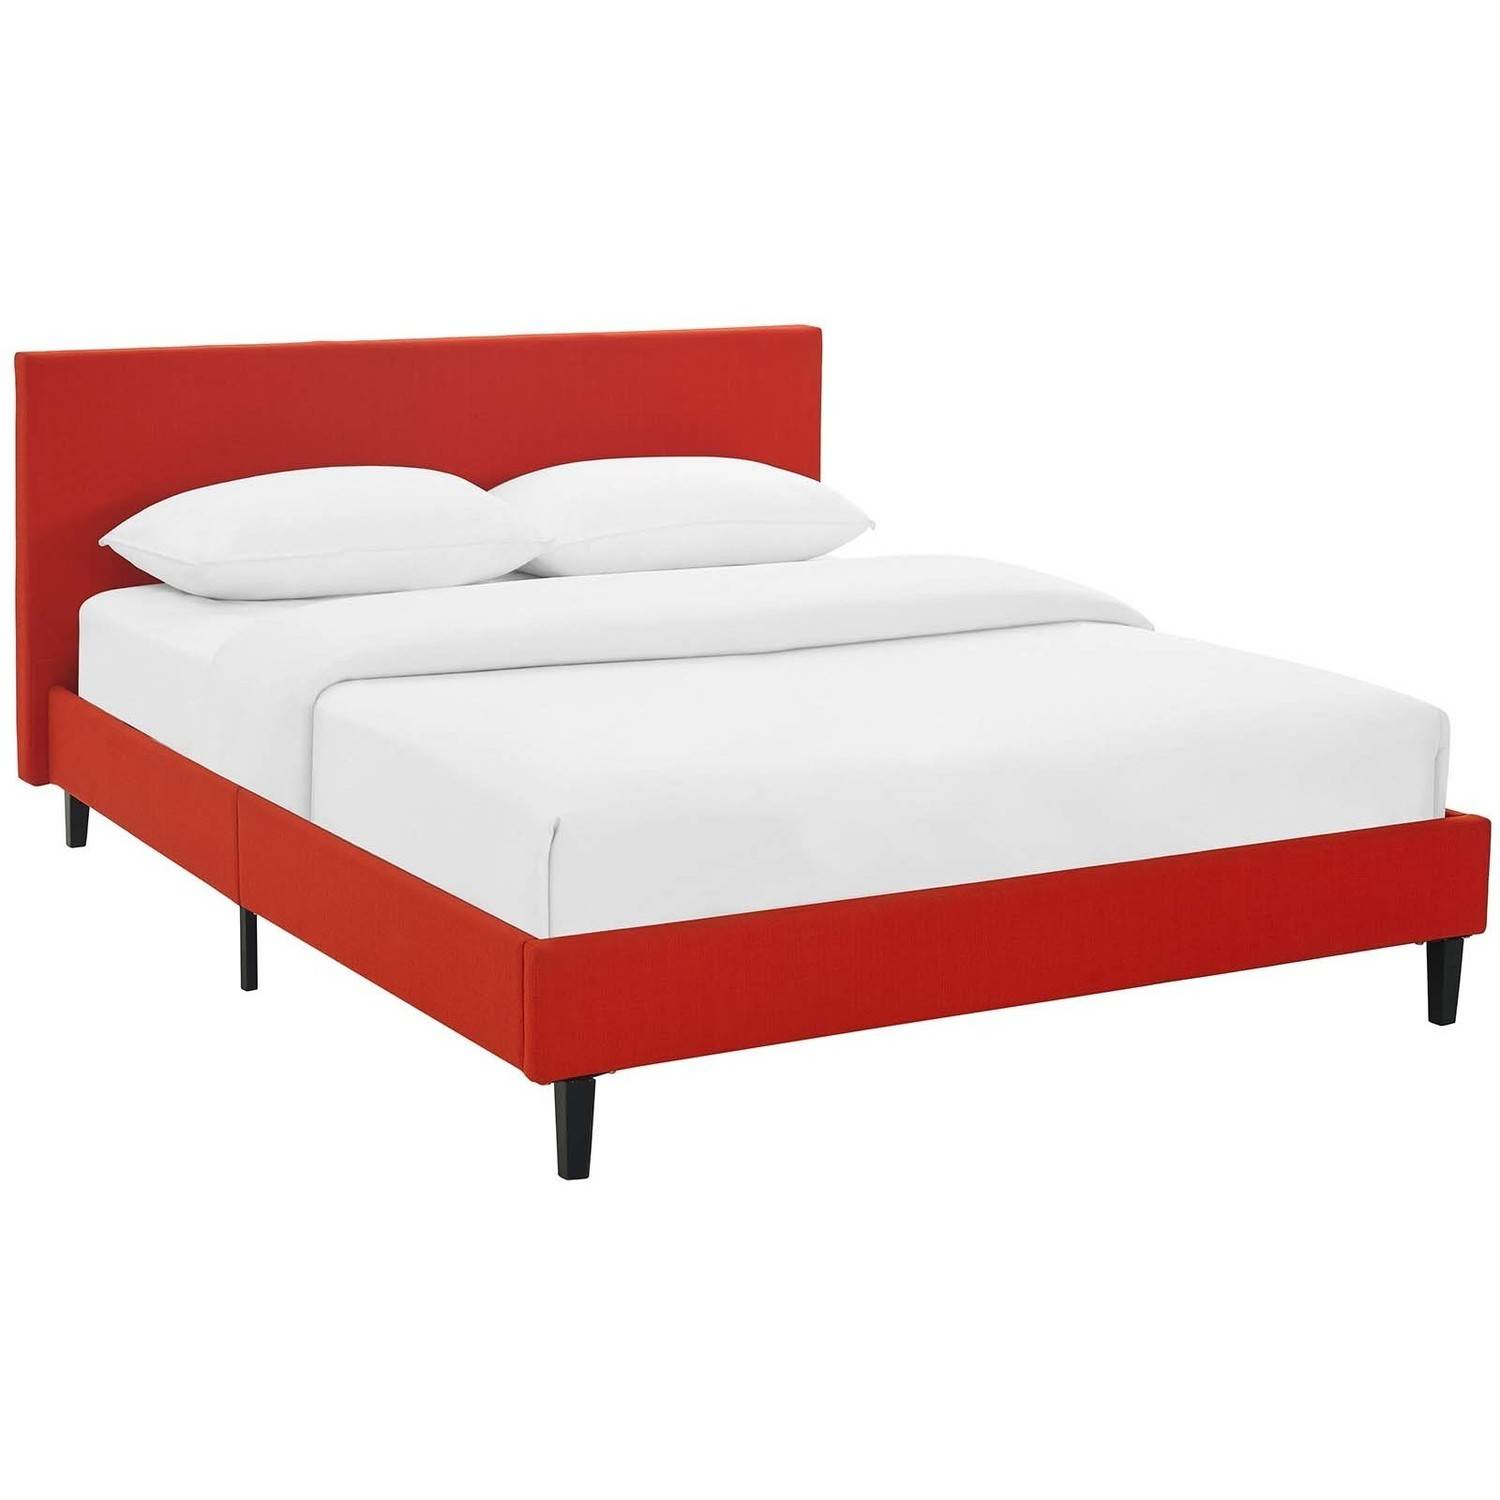 Modway Anya Fabric Platform Bed - Full - image 3 of 6